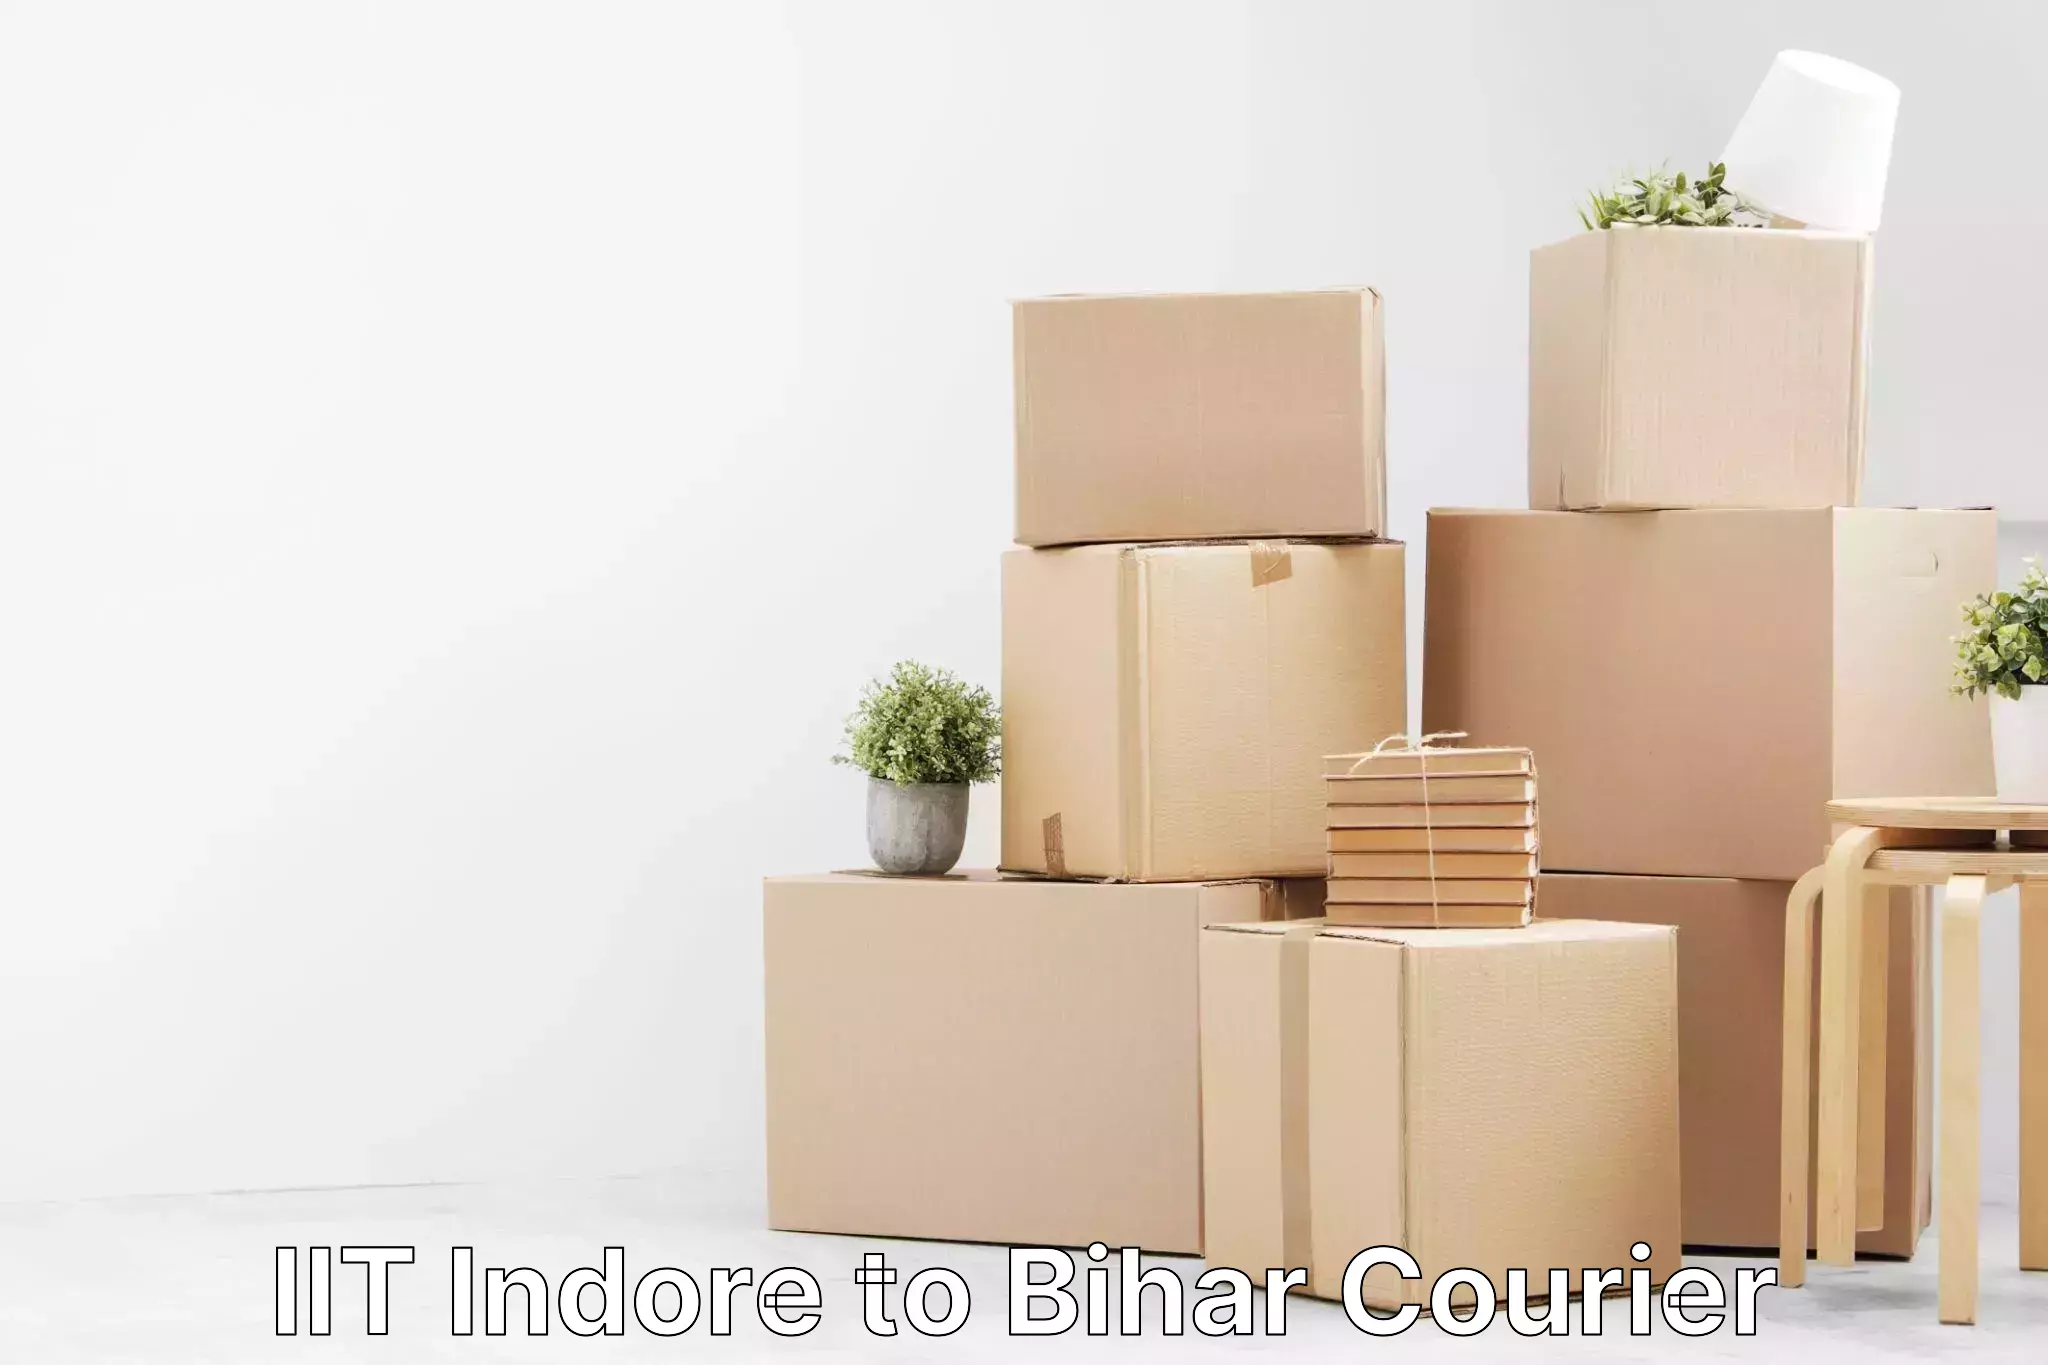 Customizable shipping options in IIT Indore to Bihar